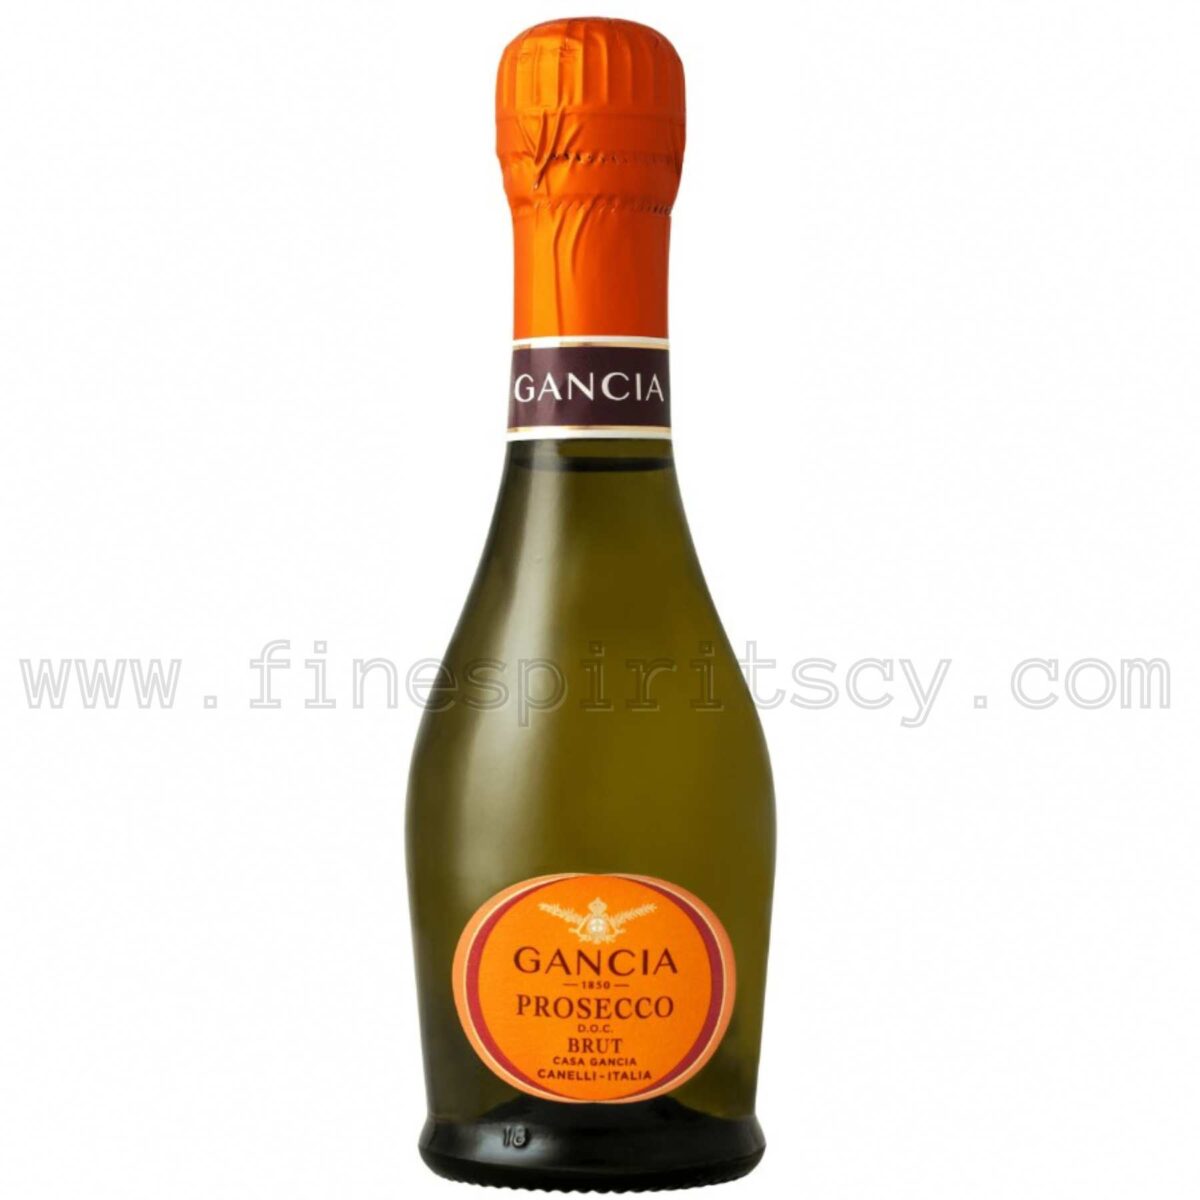 Gancia Prosecco DOC Brut 200ml 20cl 0.2l price wine cyprus online order shop